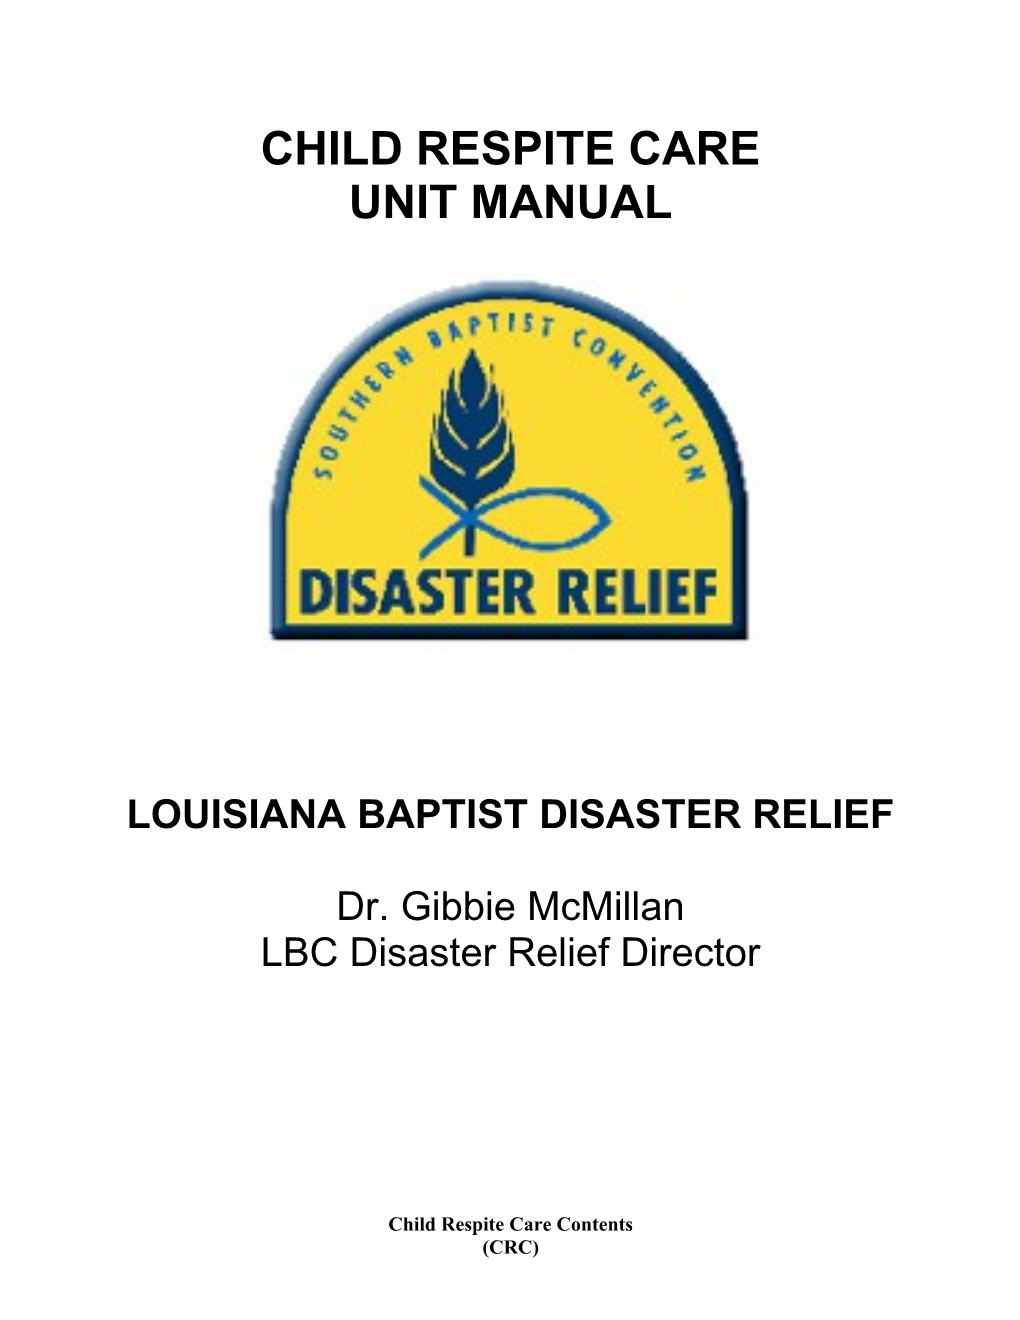 Louisiana Baptist Disaster Relief